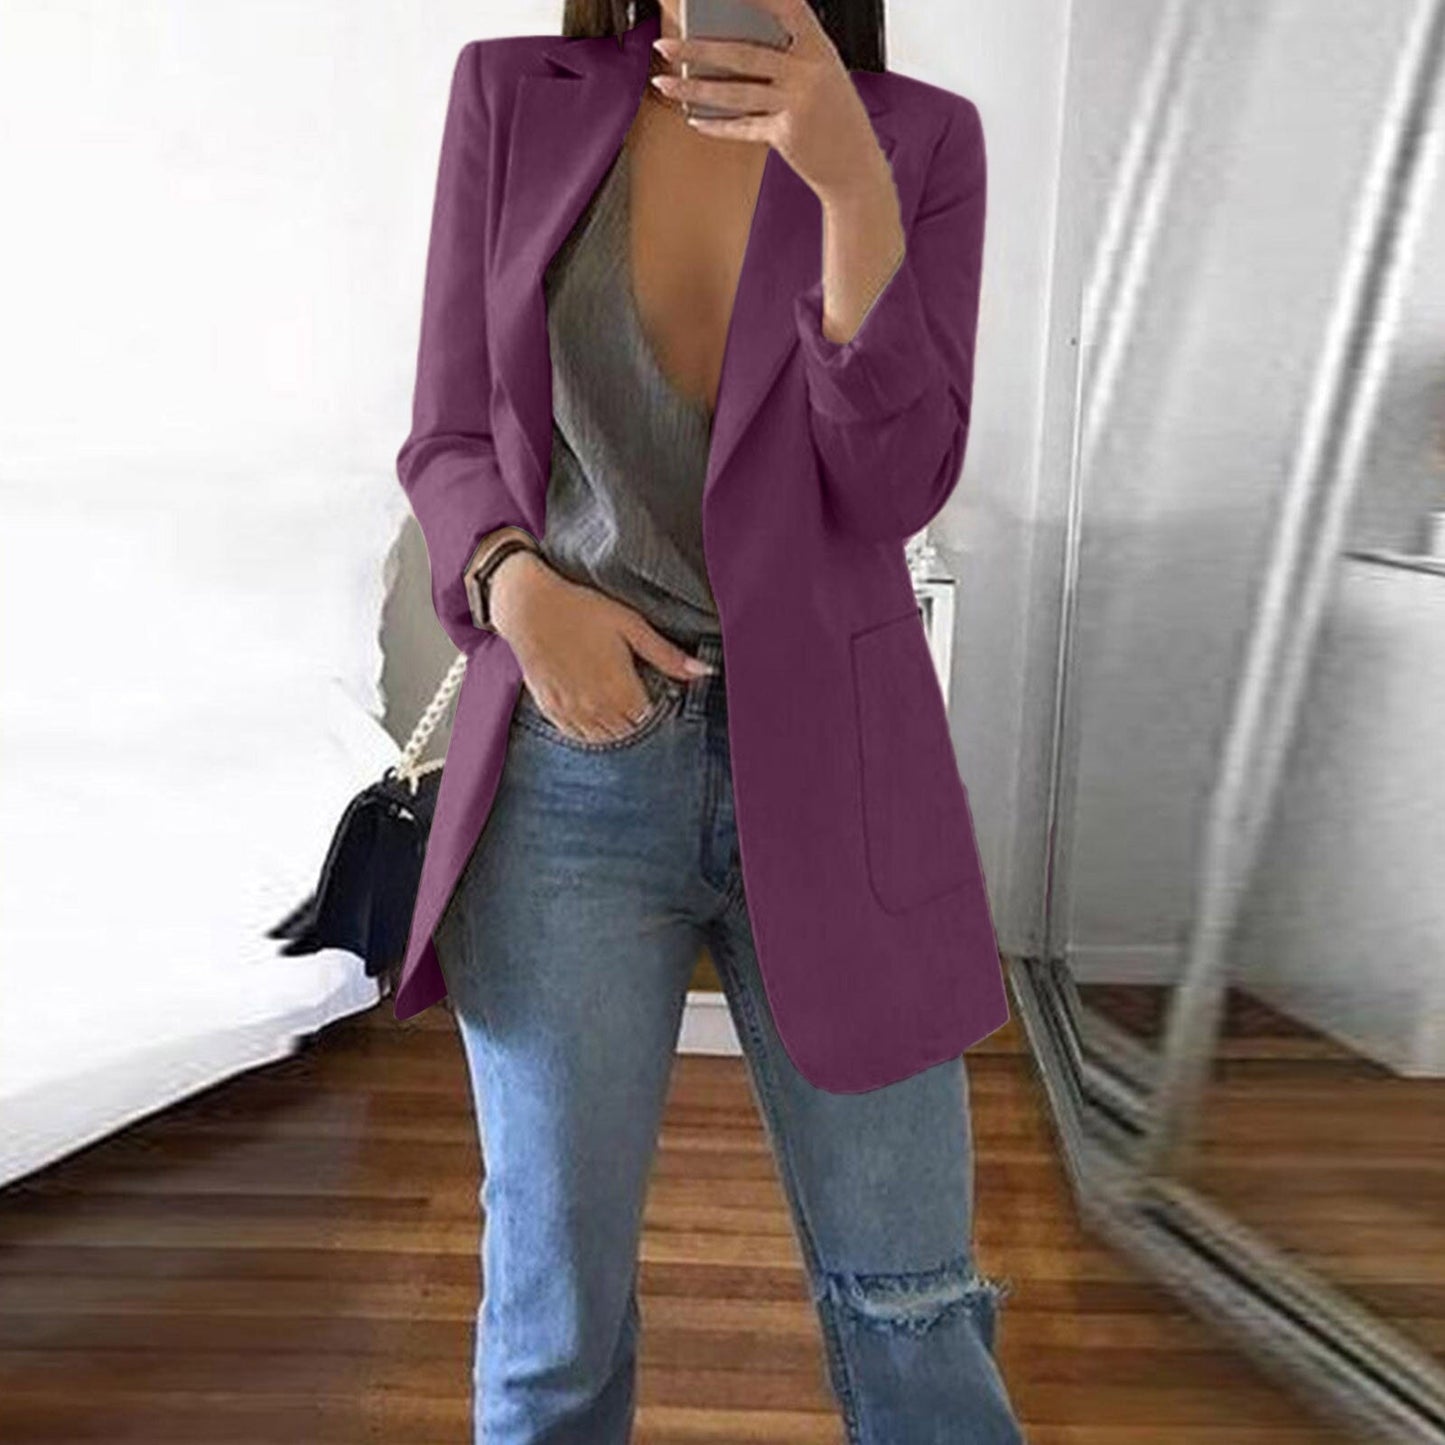 Lady Spring Slim Blazer Solid Color Pocket Coat Long Sleeve Women Jacket Autumn Fashion Blazer Jackets Office Work Coats